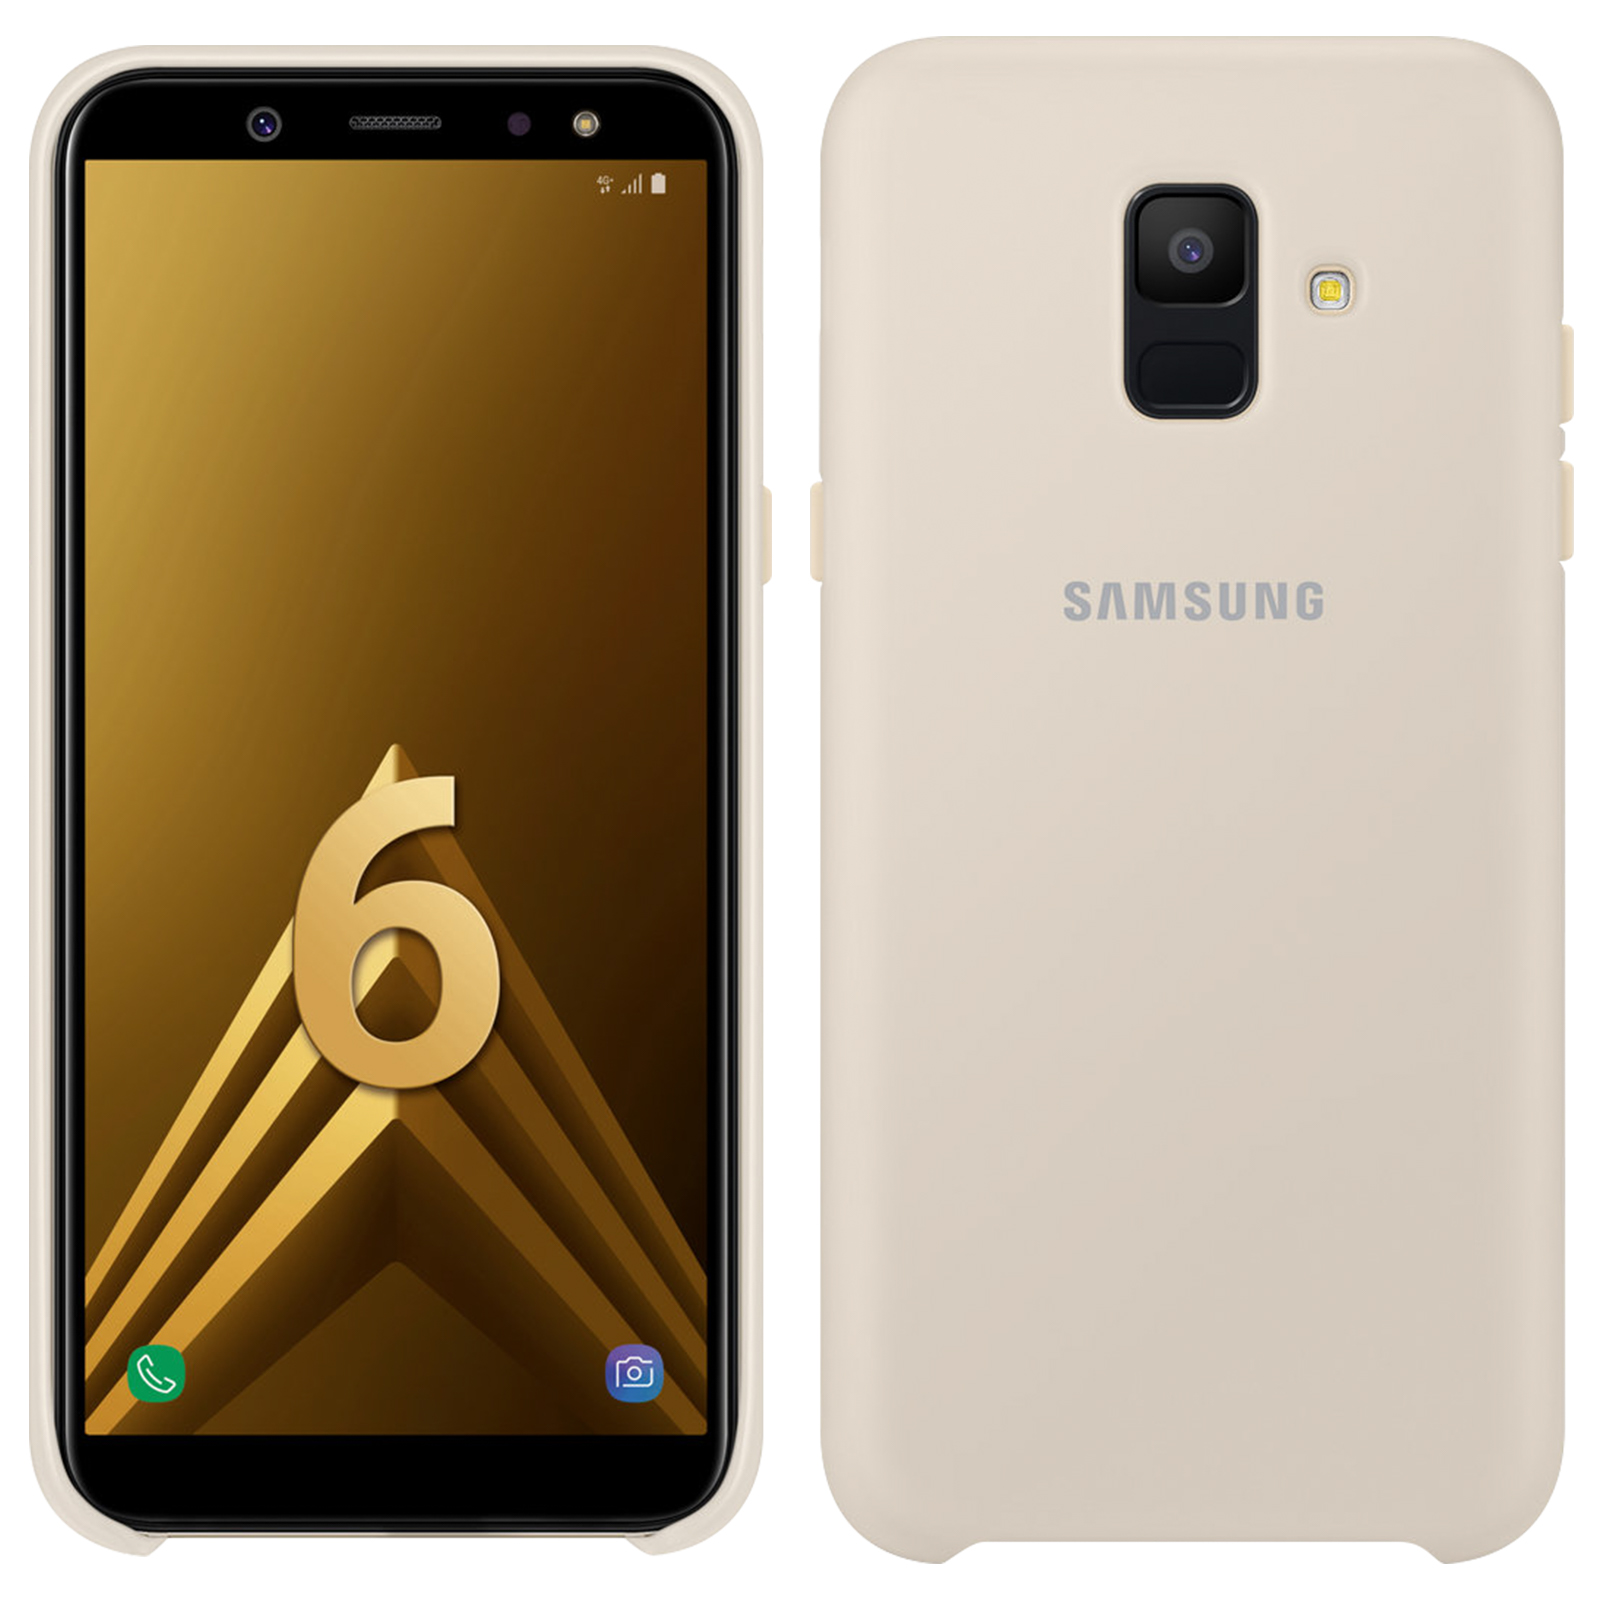 SAMSUNG DUAL LAYER Samsung, GOLD, Gold GALAXY EF-PA600 A6, F. Galaxy Backcover, A6